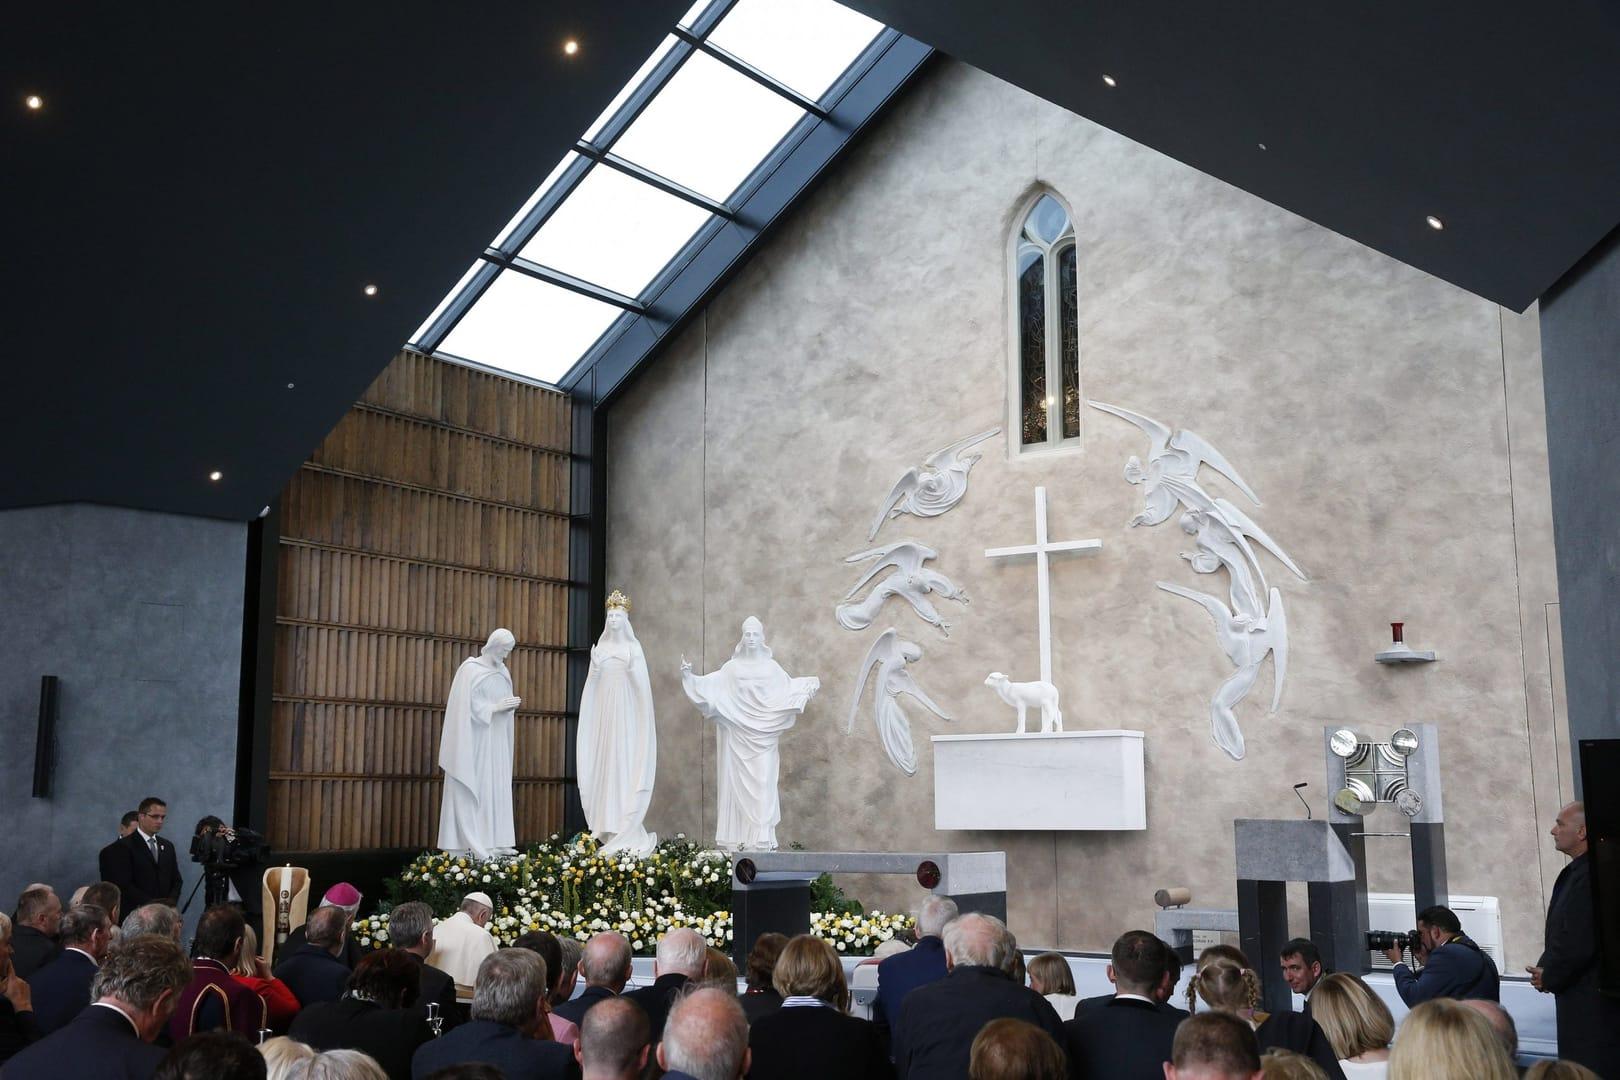 Pope elevates Ireland’s national Knock Shrine to international status